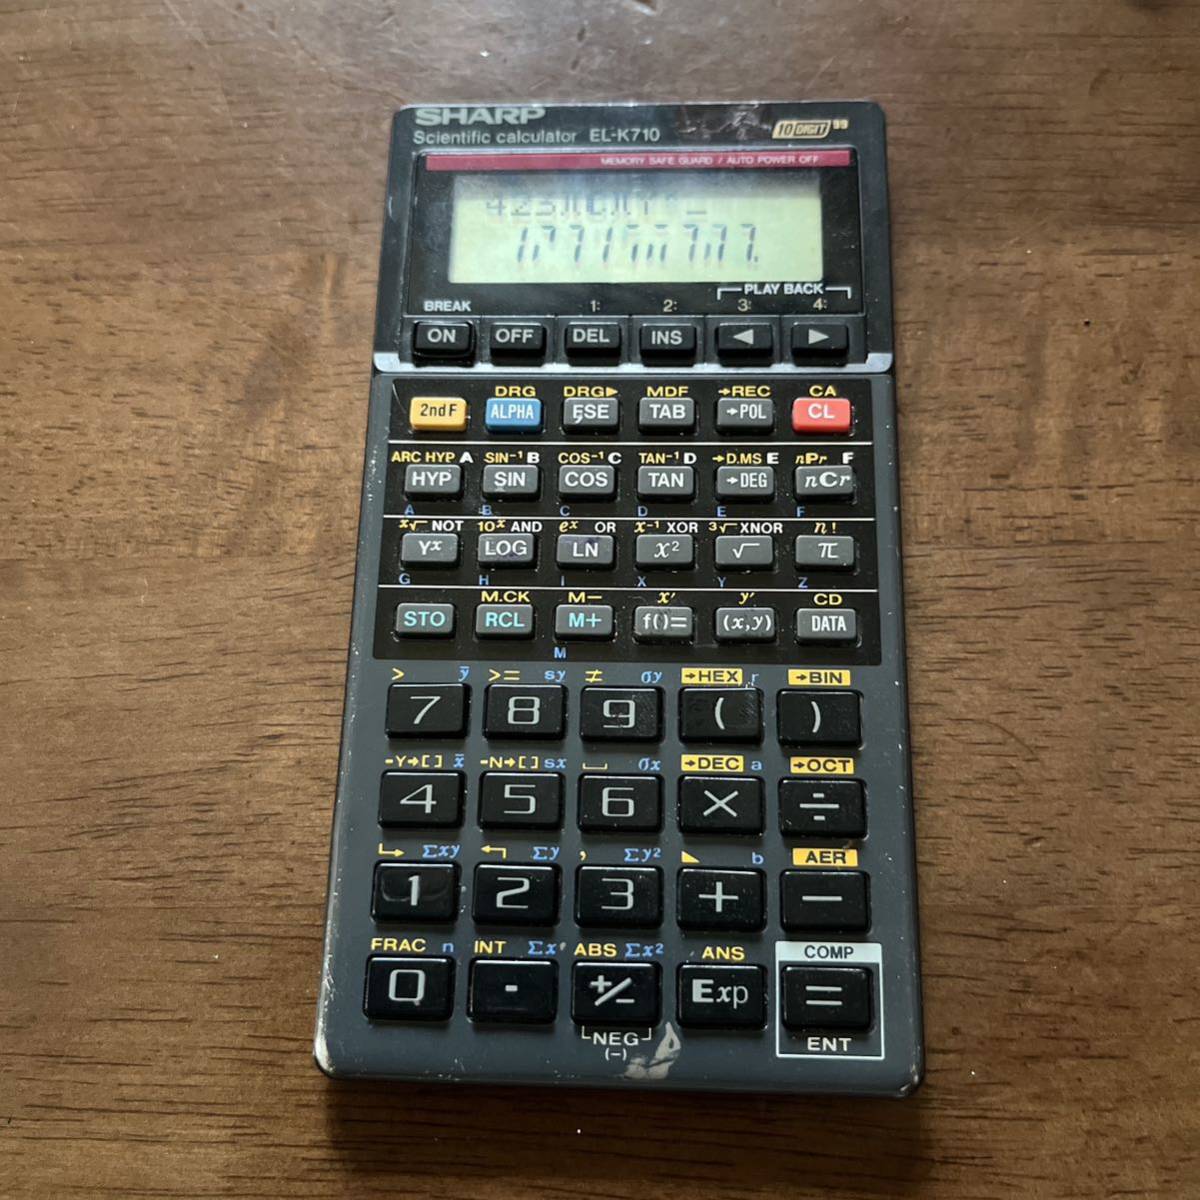 USED sharp scientific calculator! junk 